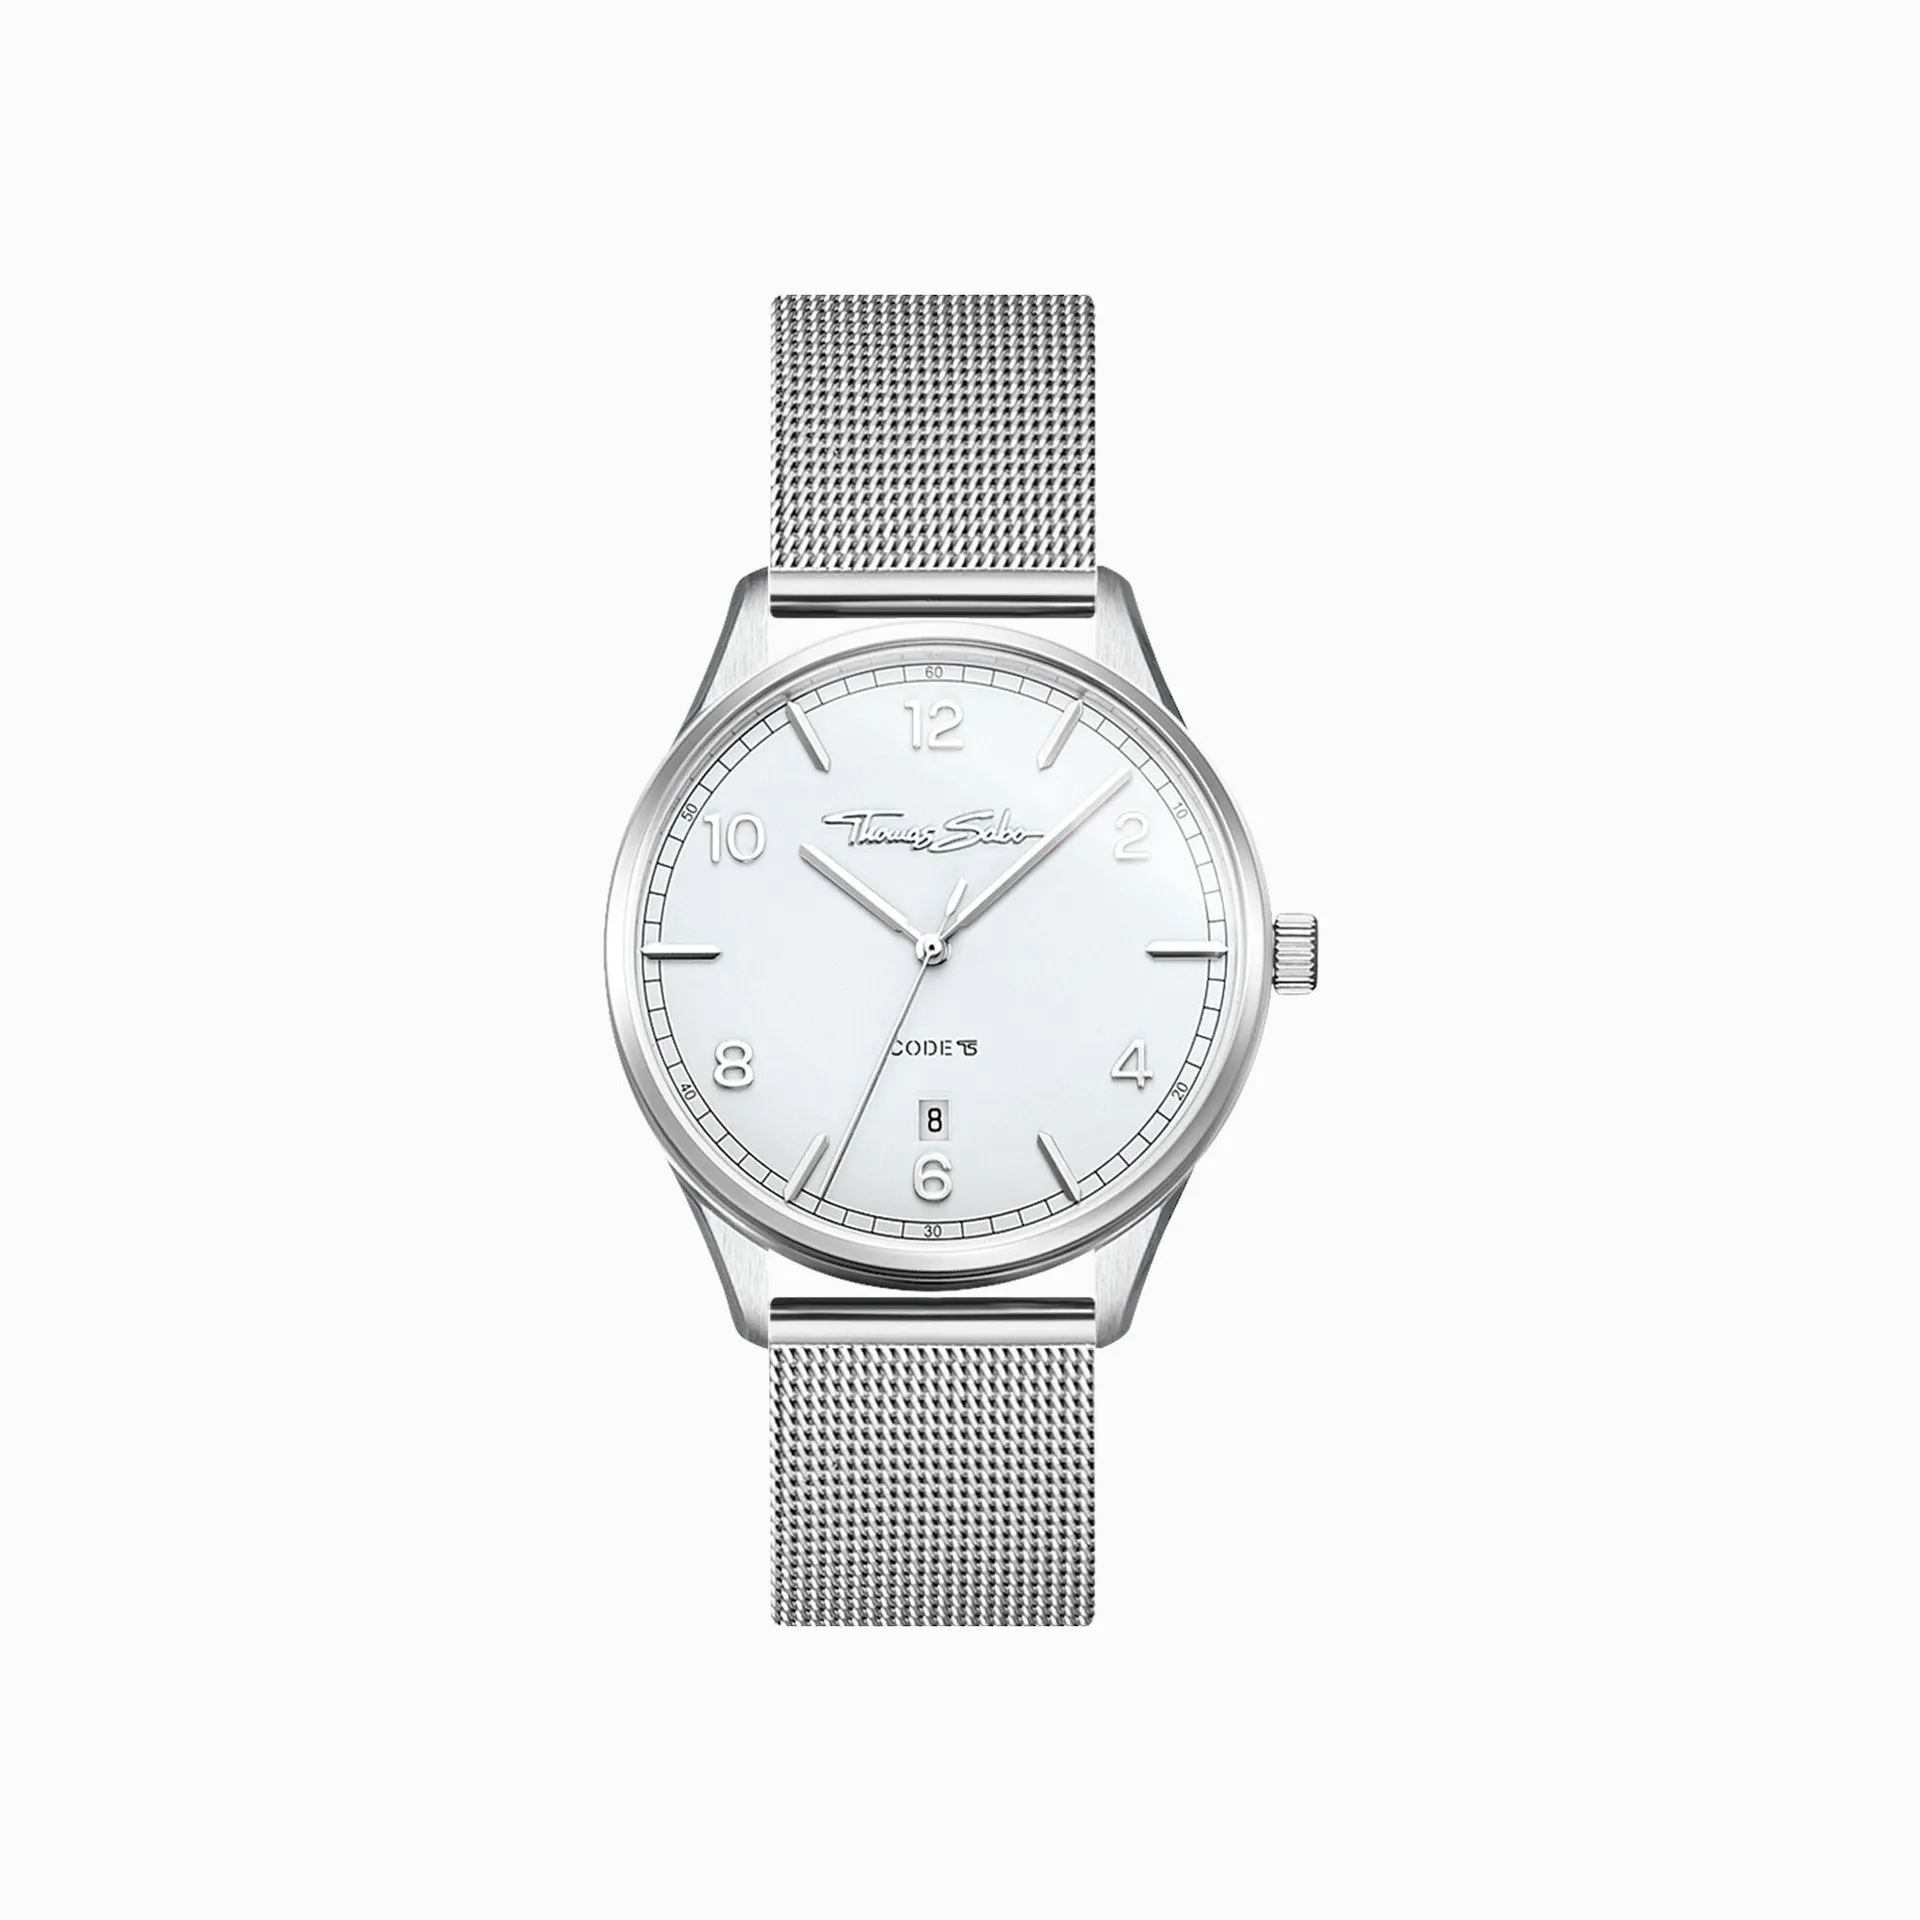 Women’s watch Code TS small silver